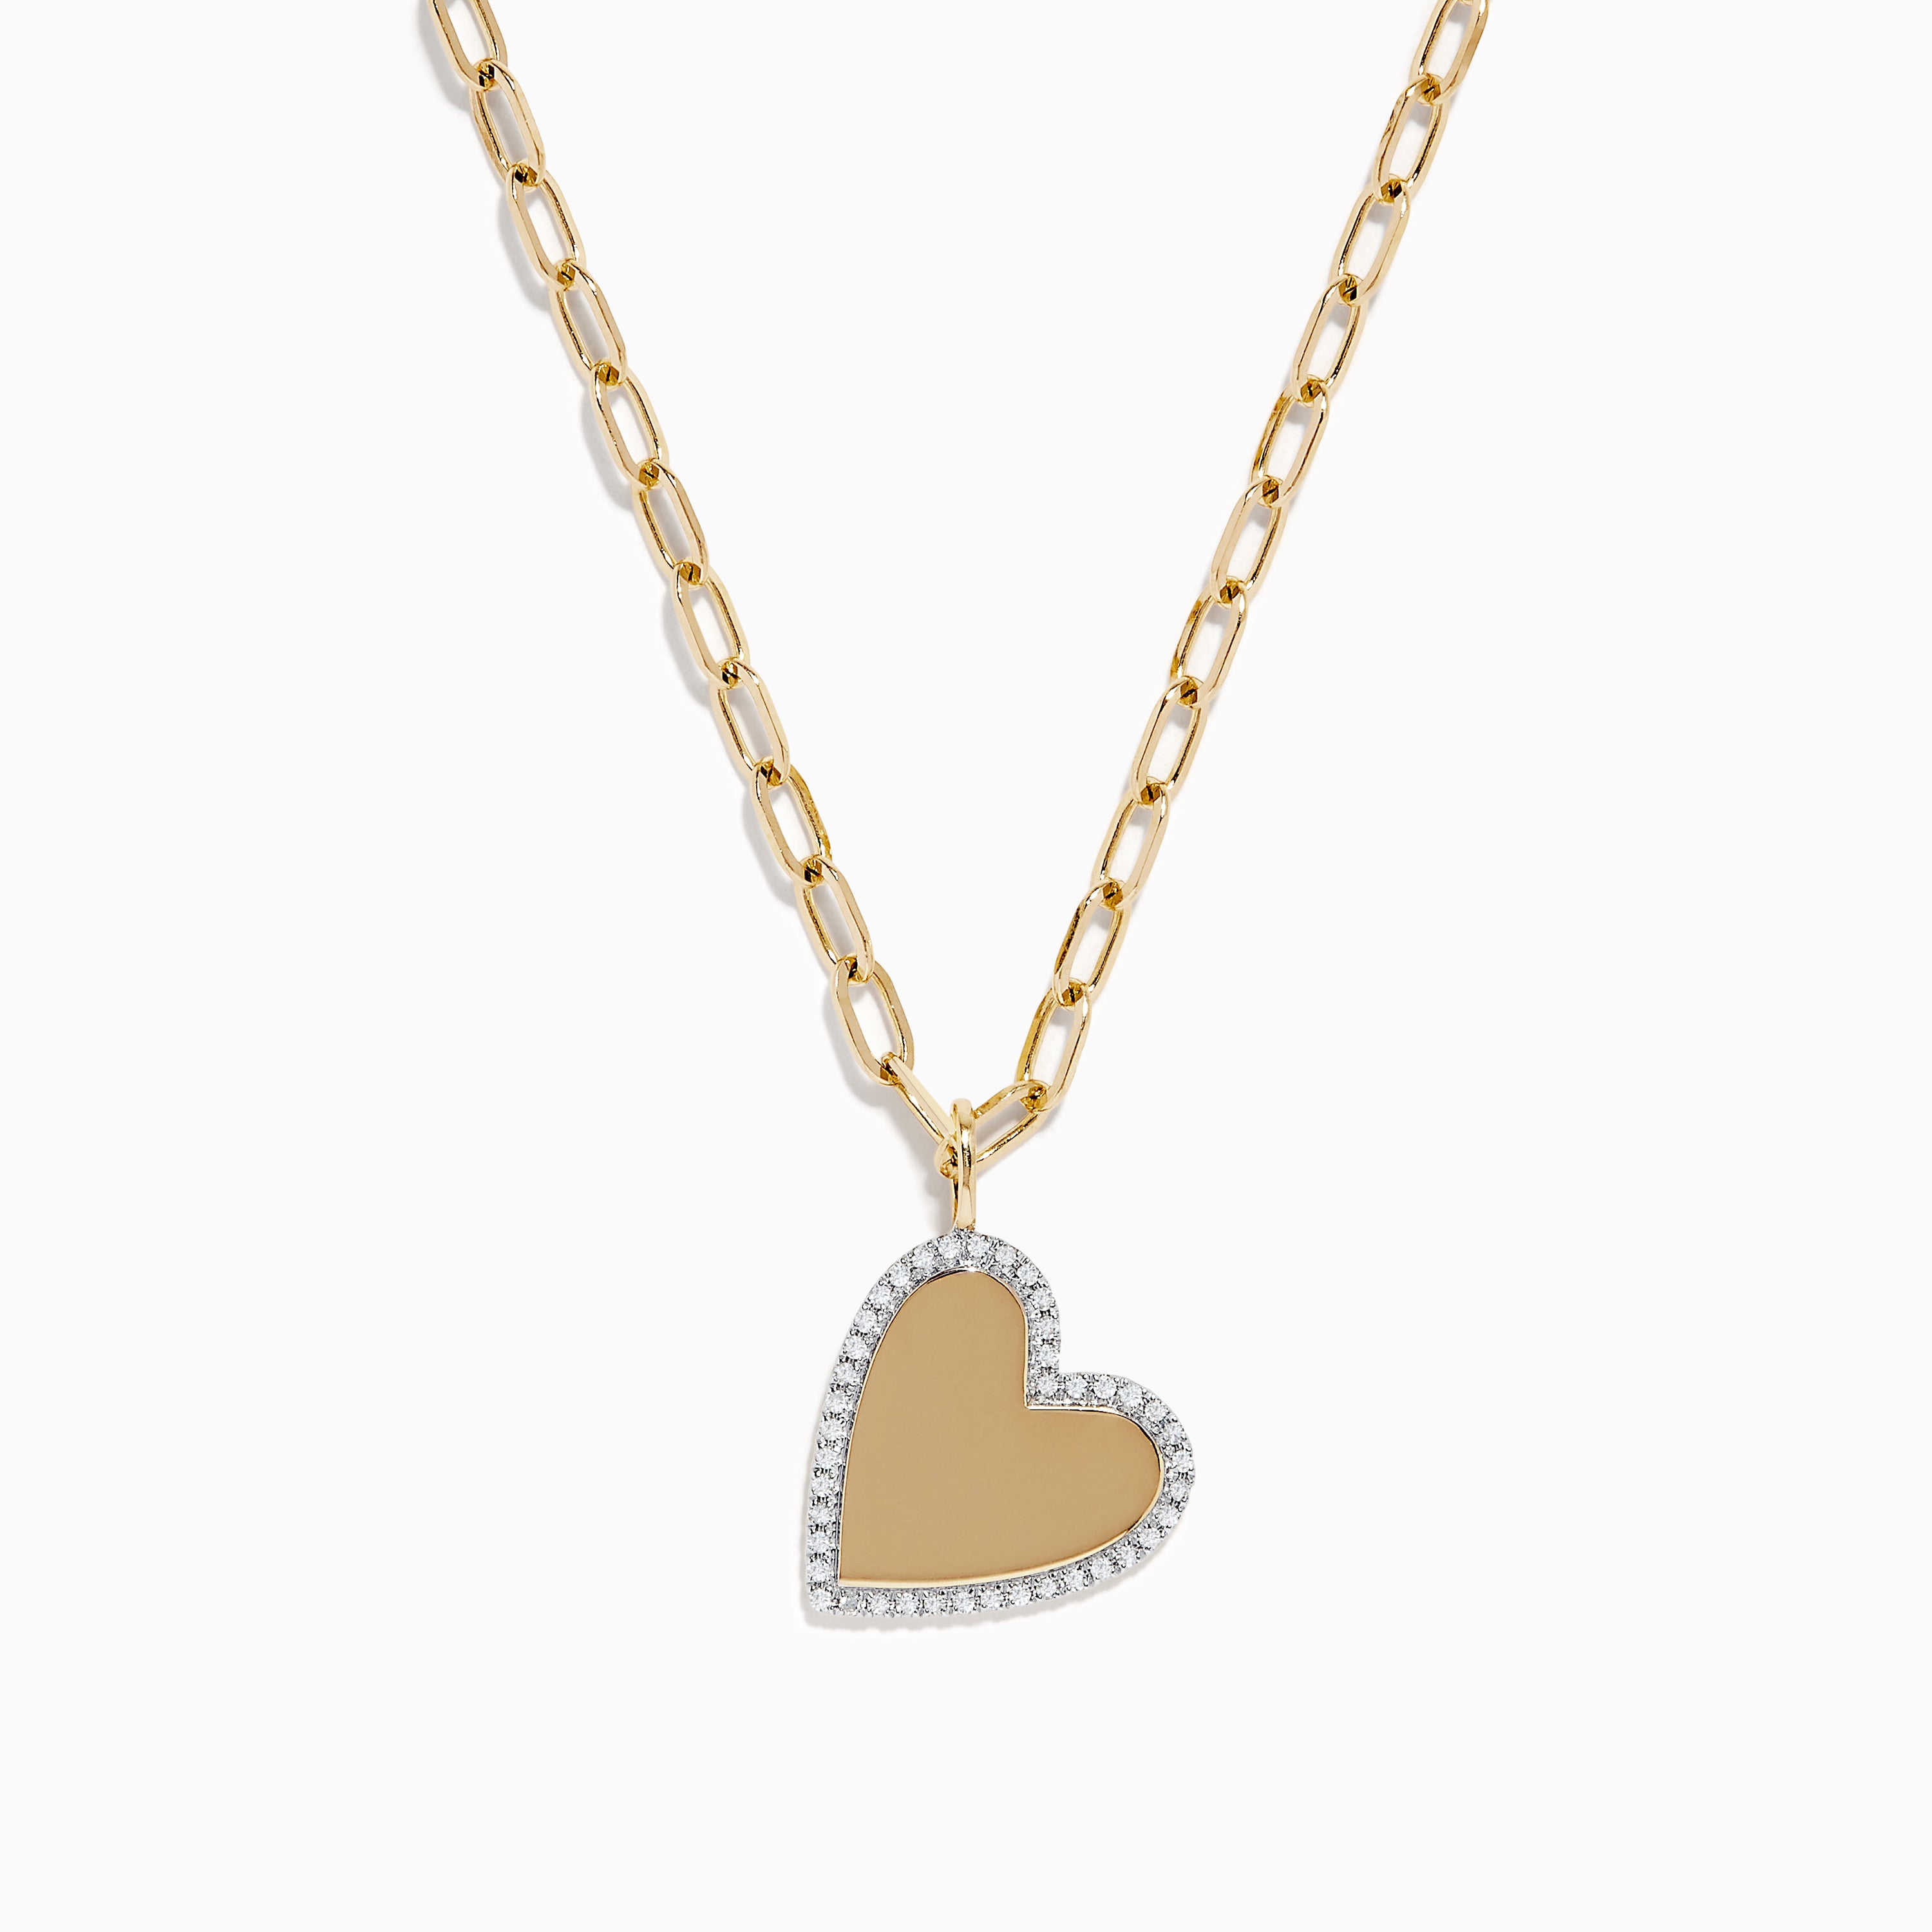 Effy Novelty 14K Yellow Gold Diamond Heart Pendant